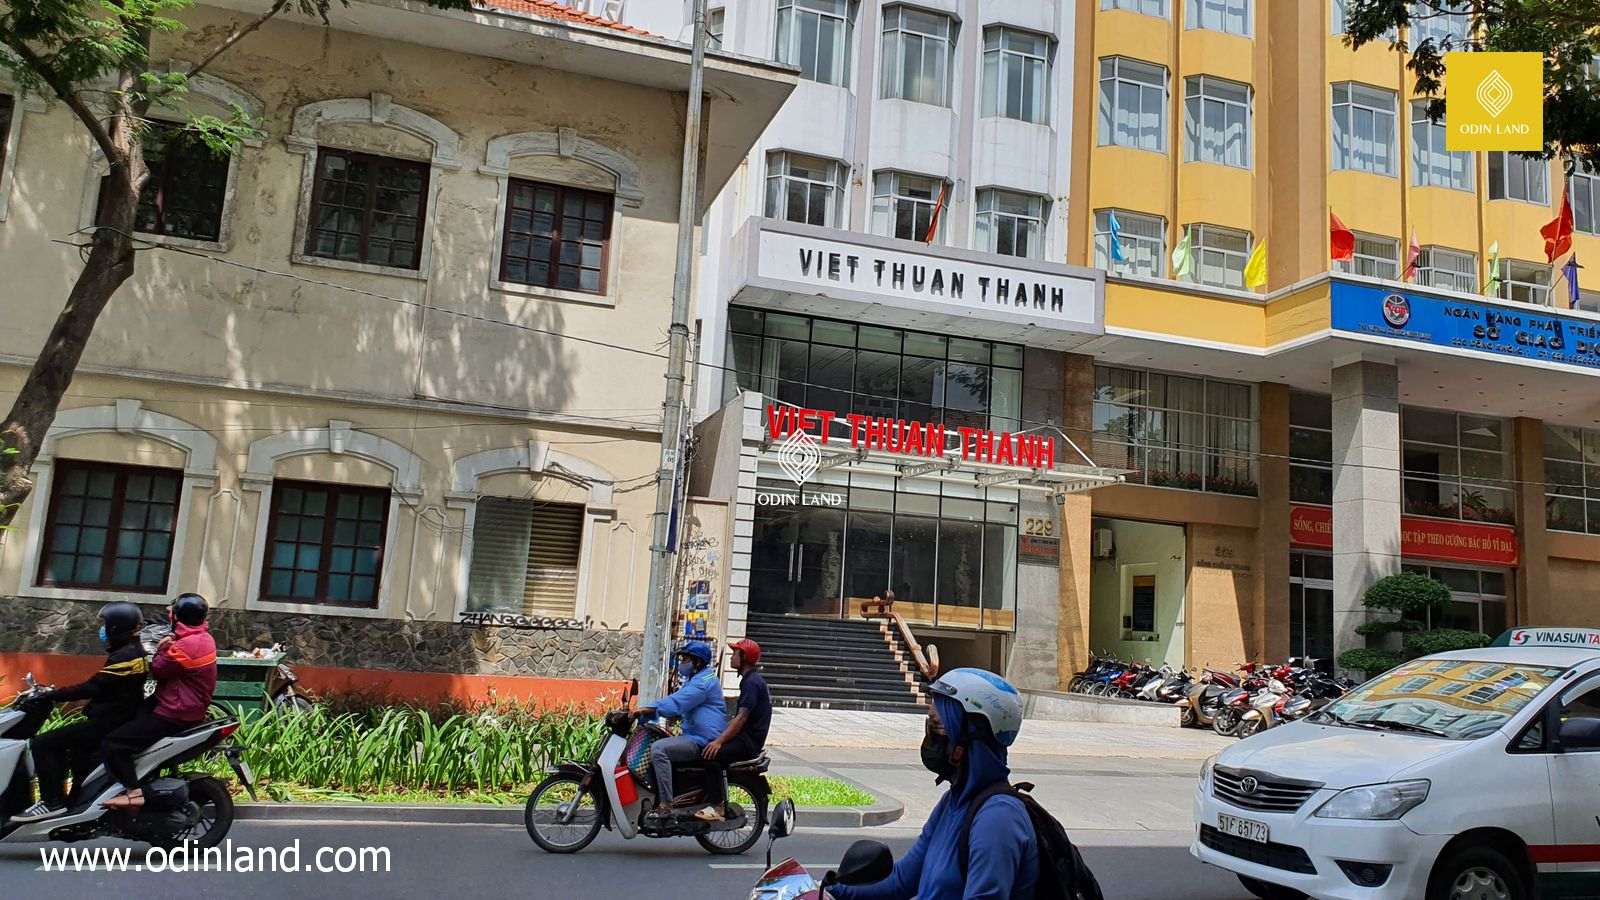 Viet Thuan Thanh building